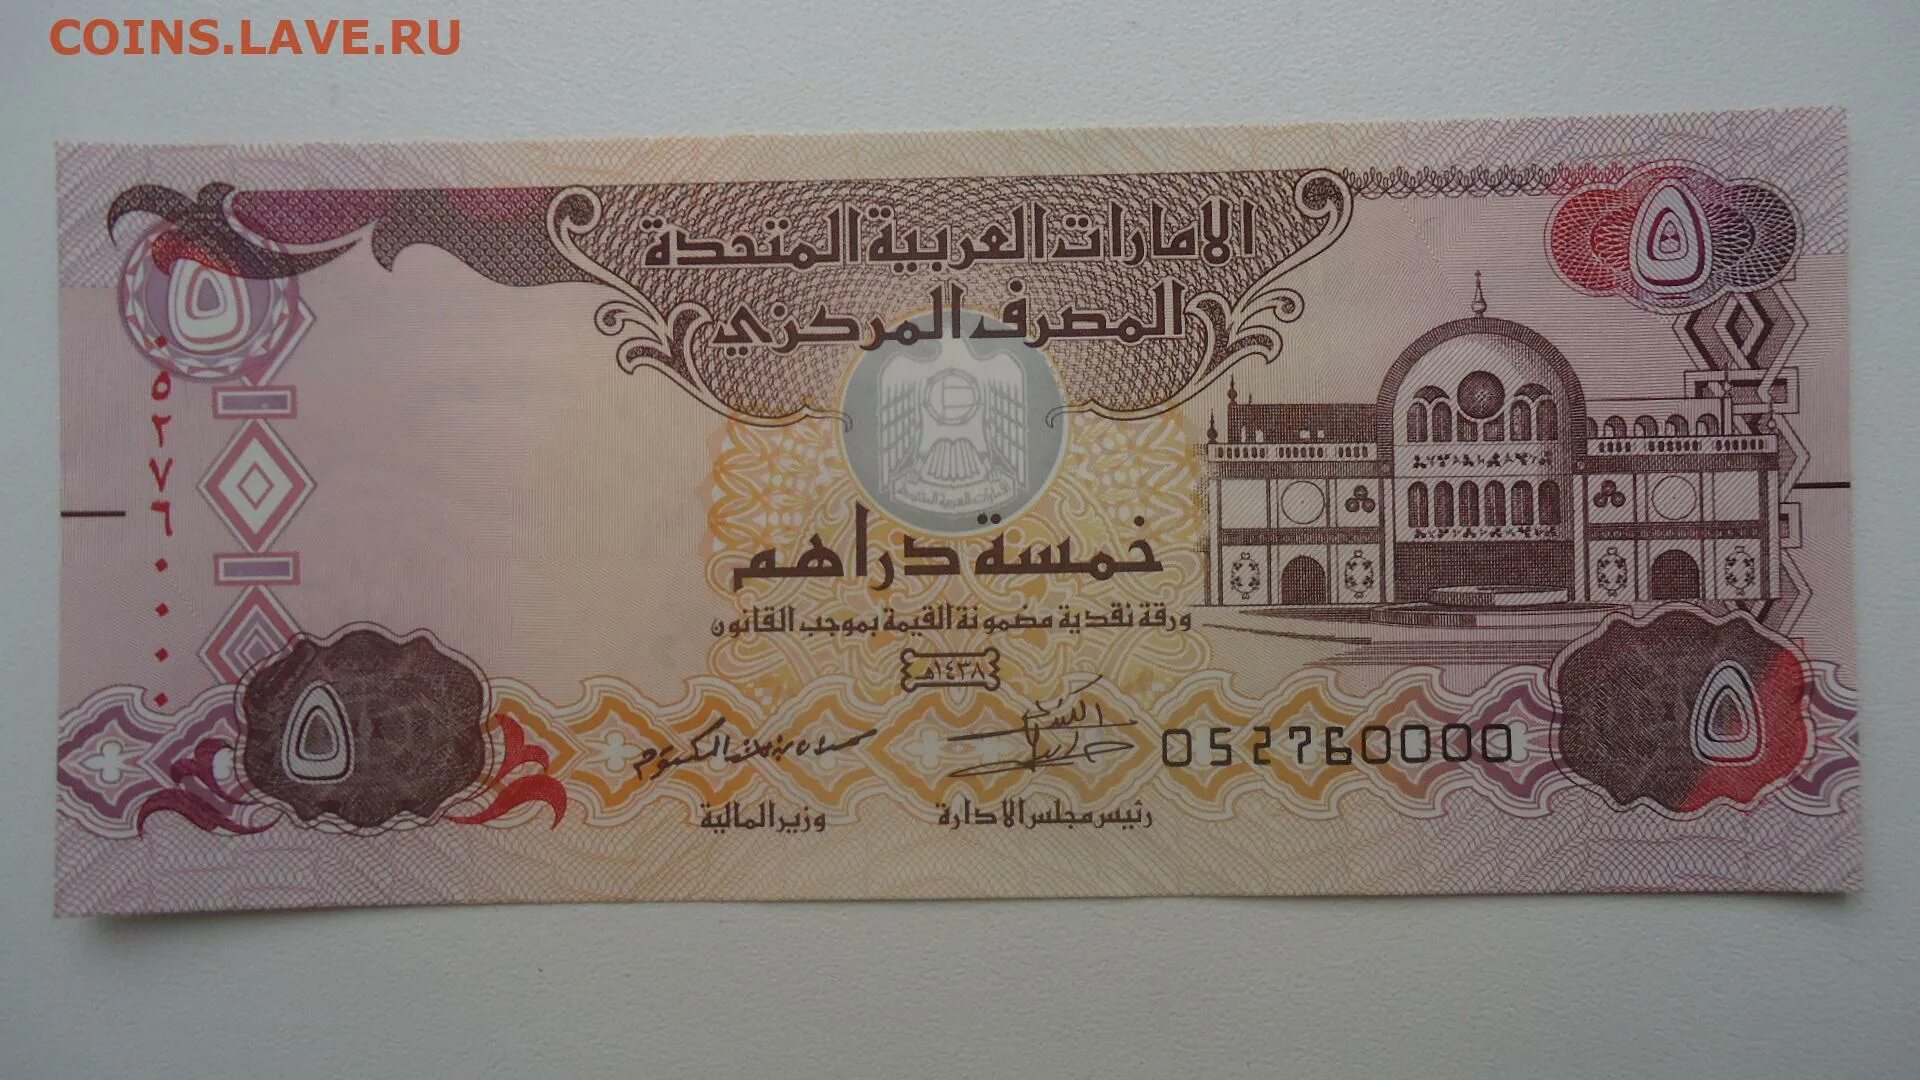 140 дирхам. 5 Дирхам ОАЭ. Банкнота ОАЭ 10 дирхам. 25 Дирхам Объединенные арабские эмираты. Дирхам ОАЭ К доллару США.